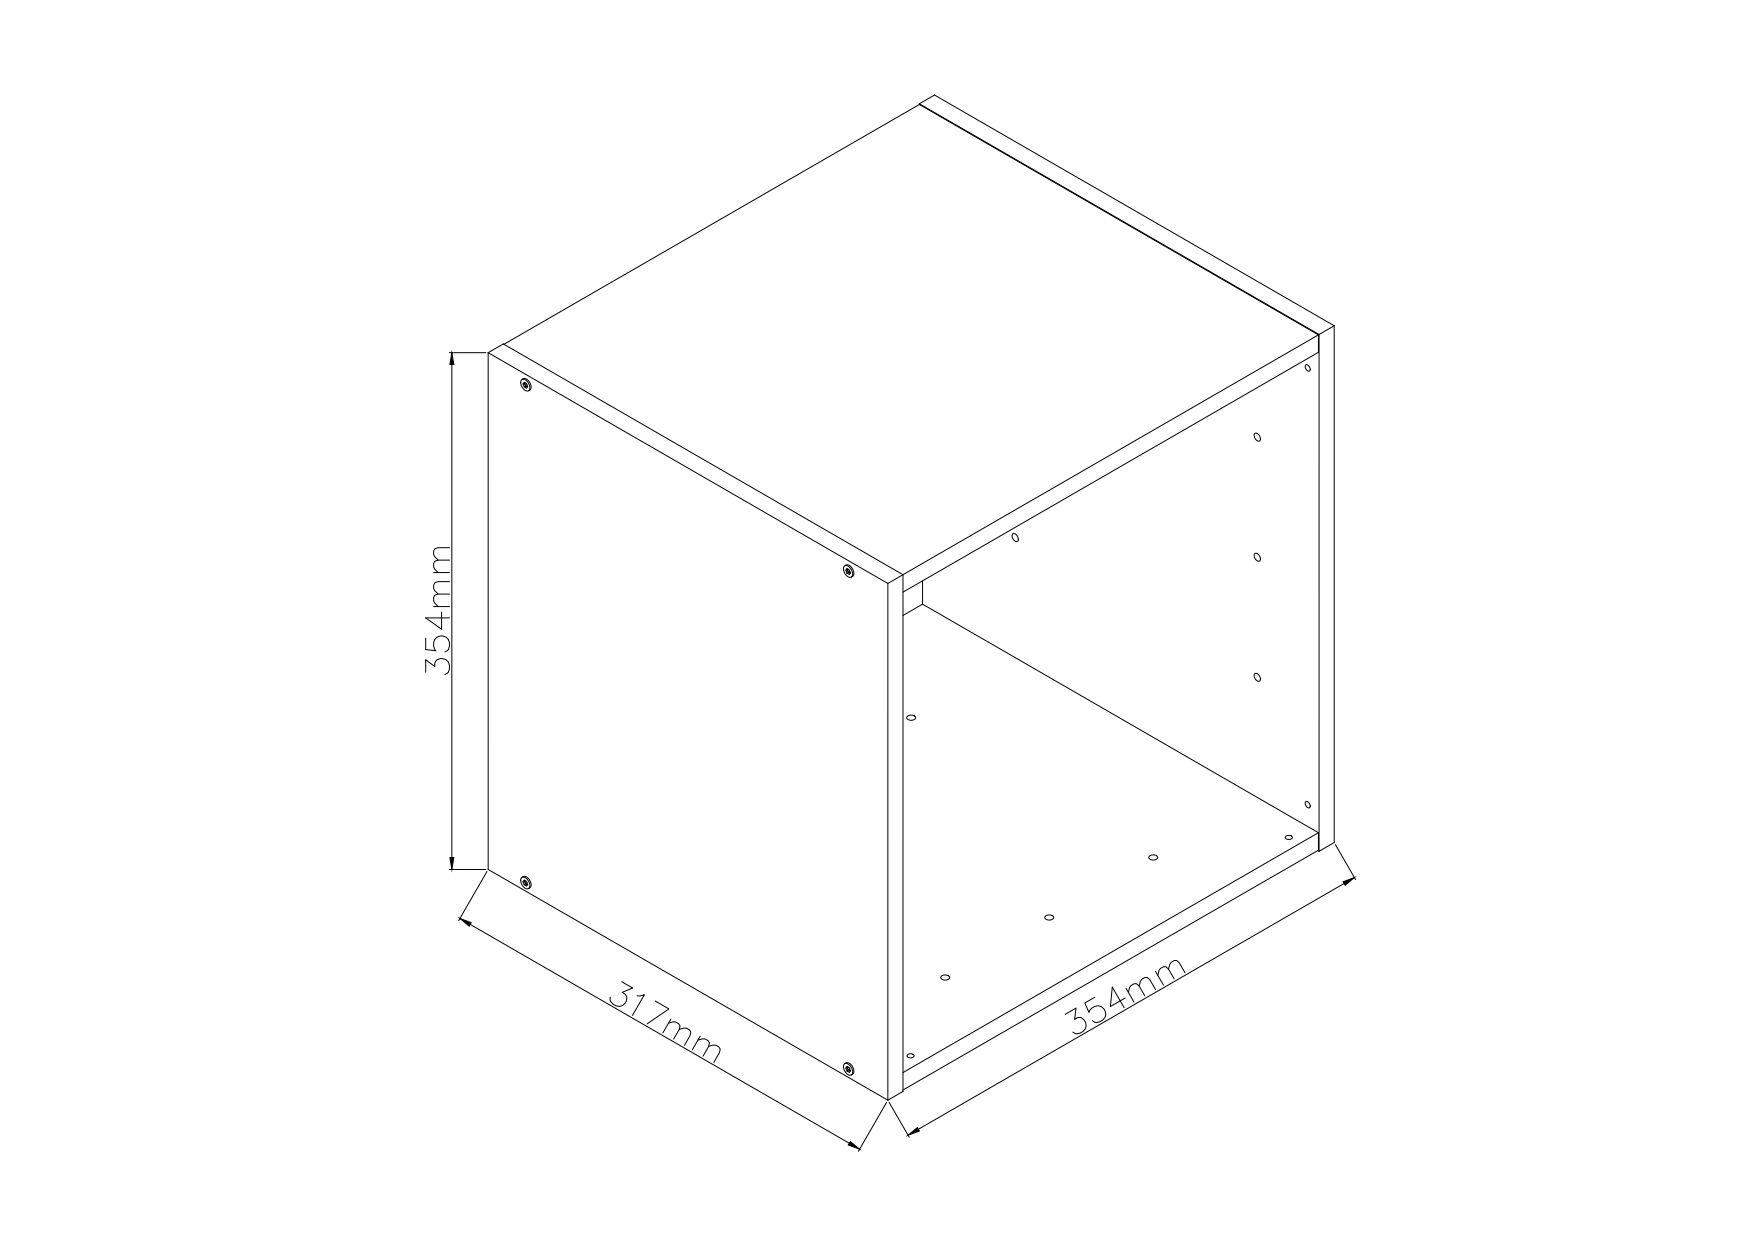 GoodHome Konnect Grey Cube Shelving unit, (H)354mm (W)354mm